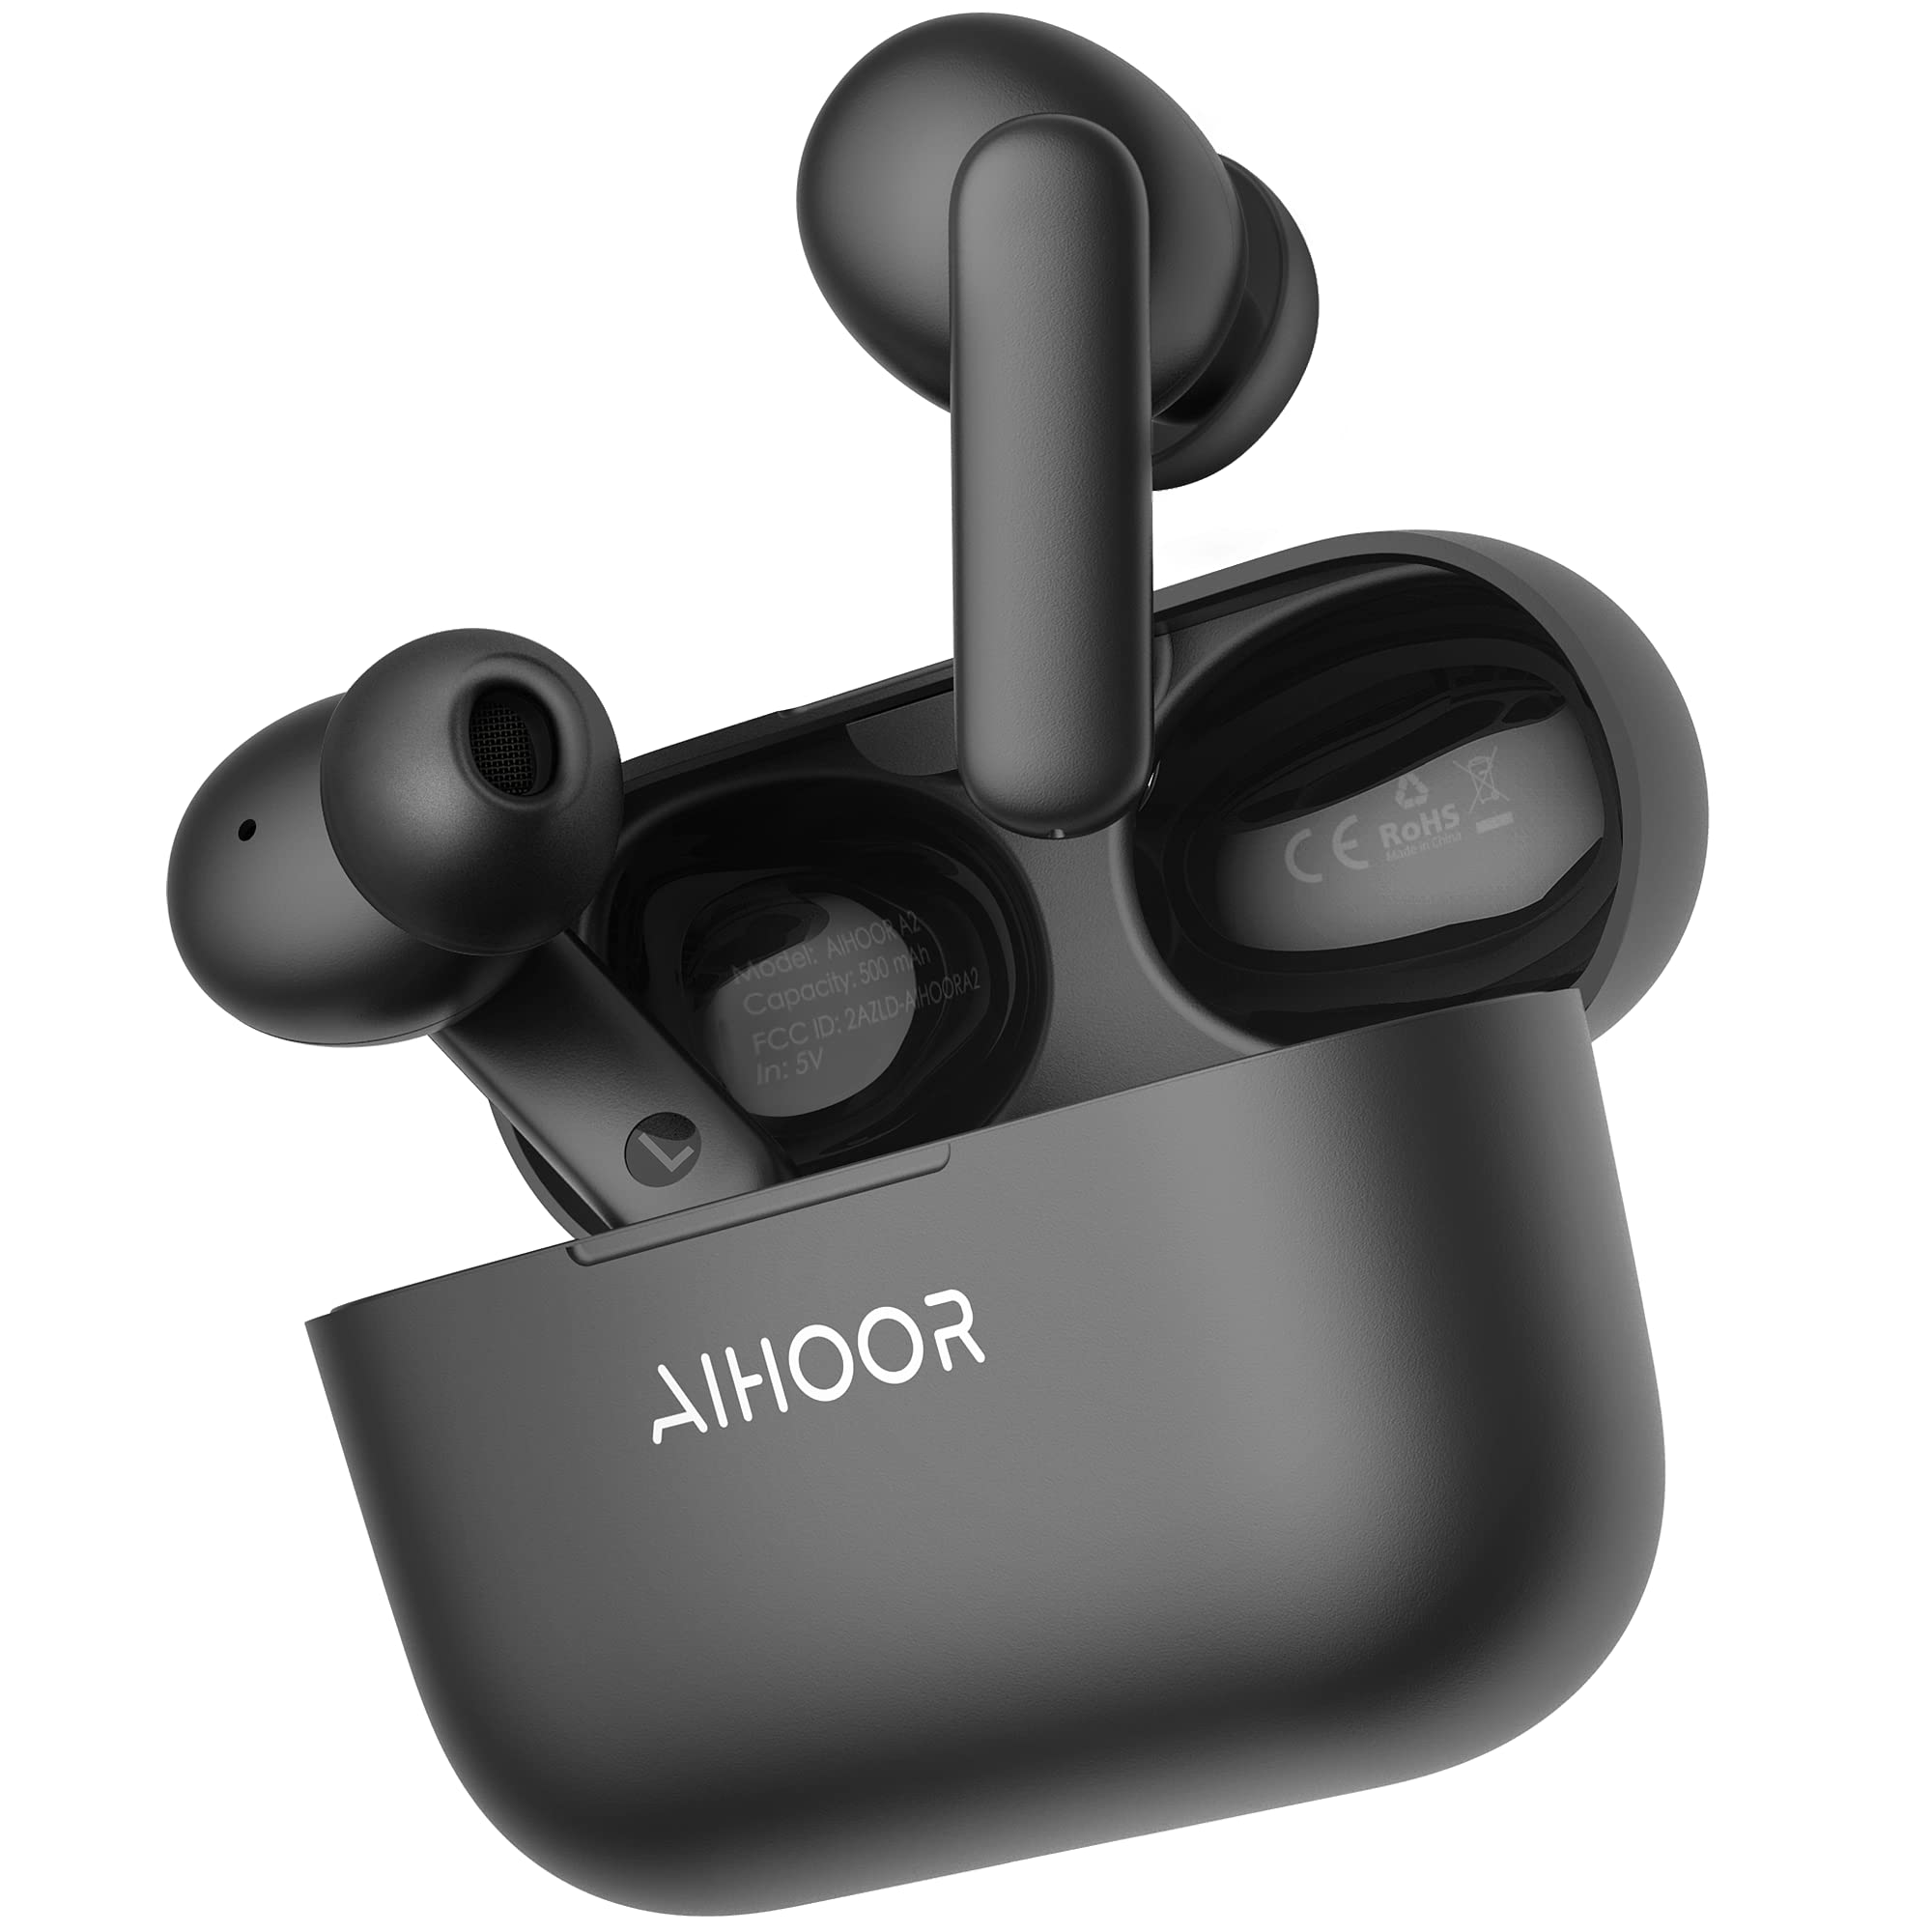  AIHOOR 适用于 iOS 和 Android 手机的无线耳塞式耳机，具有超重低音的蓝牙 5.3 入耳式耳机，内置麦克风，触摸控制，USB 充电盒，电池续航时间为 30 小时的...